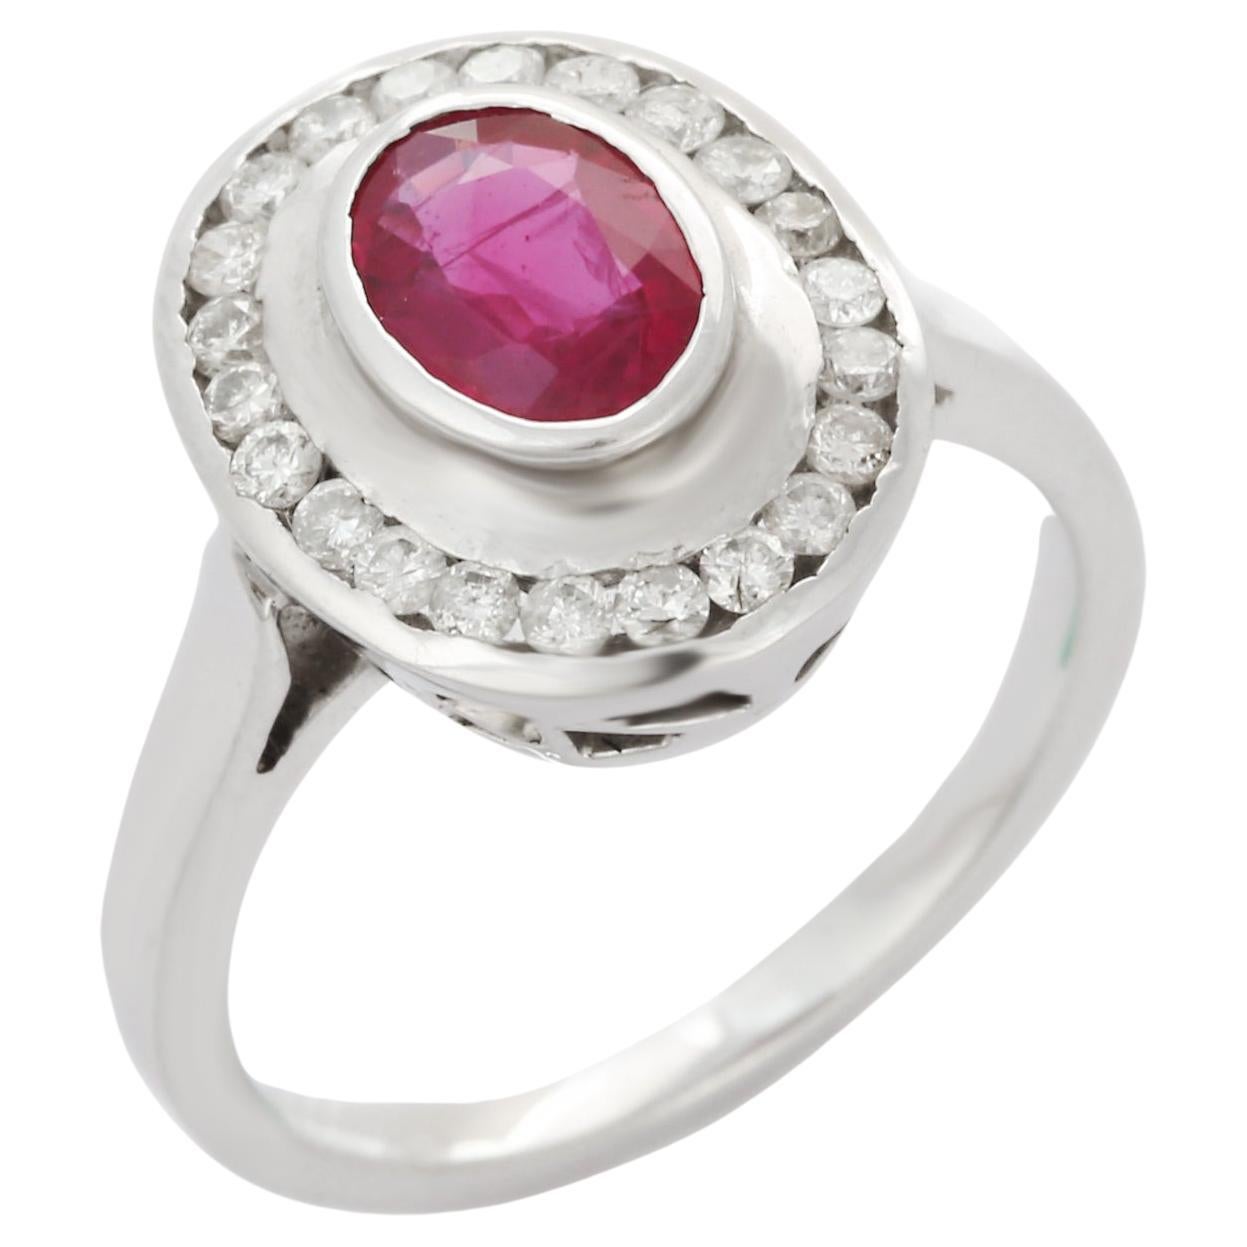 For Sale:  Bezel Set Oval Shape Ruby Diamond Cocktail Ring in 18K White Gold 6